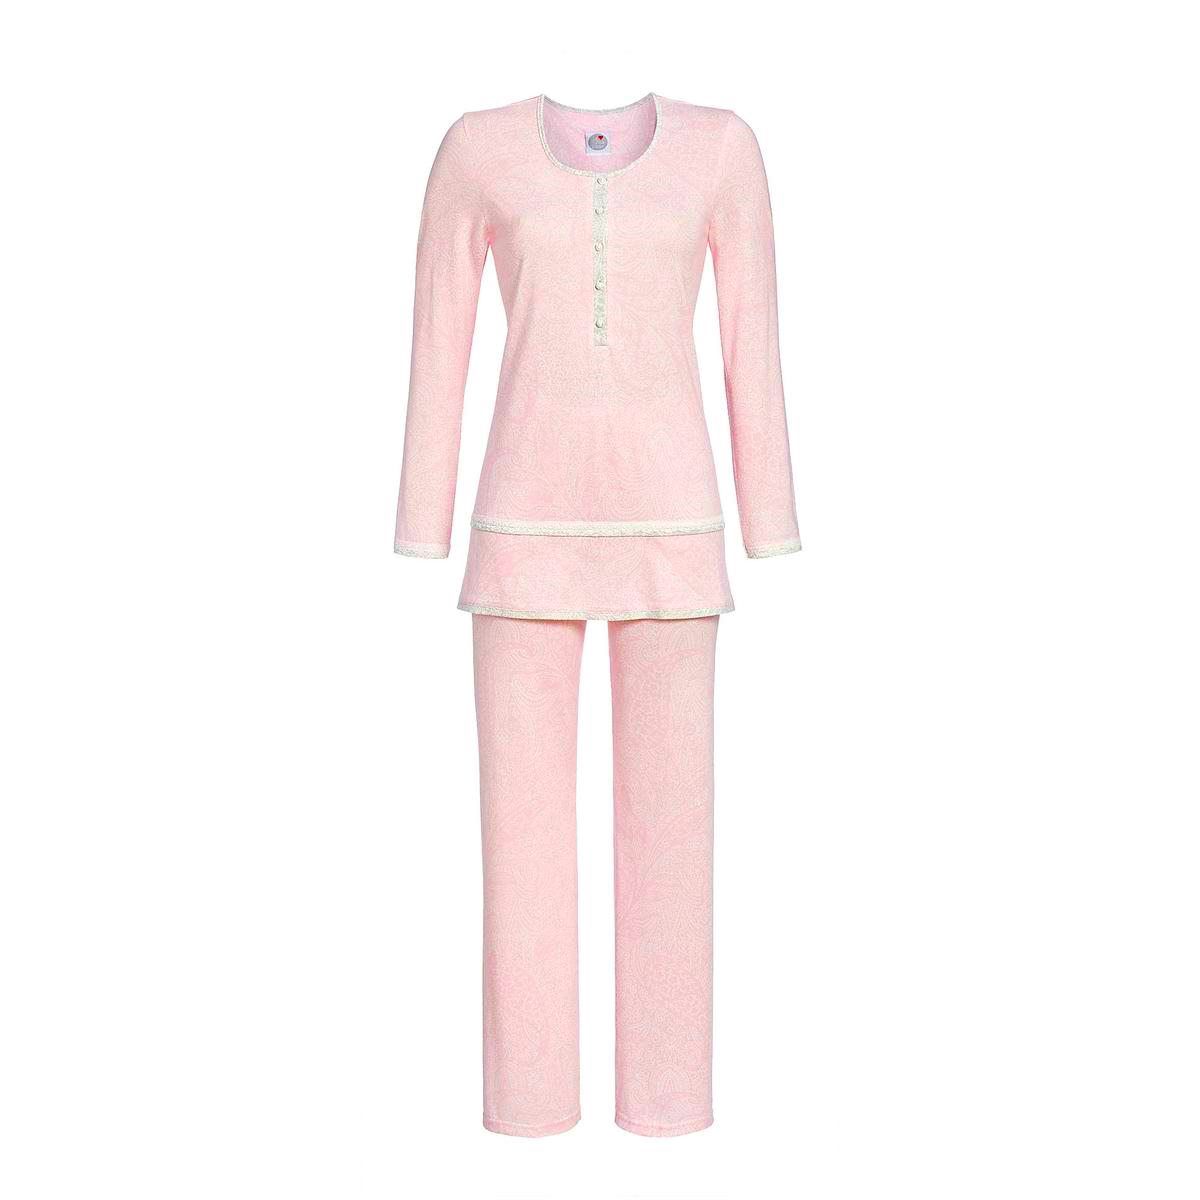 Dubbelzinnigheid openbaring sirene Dames pyjama licht roze Ringella | Online de mooiste pyjama's, nachthemden,  ondermode en meer